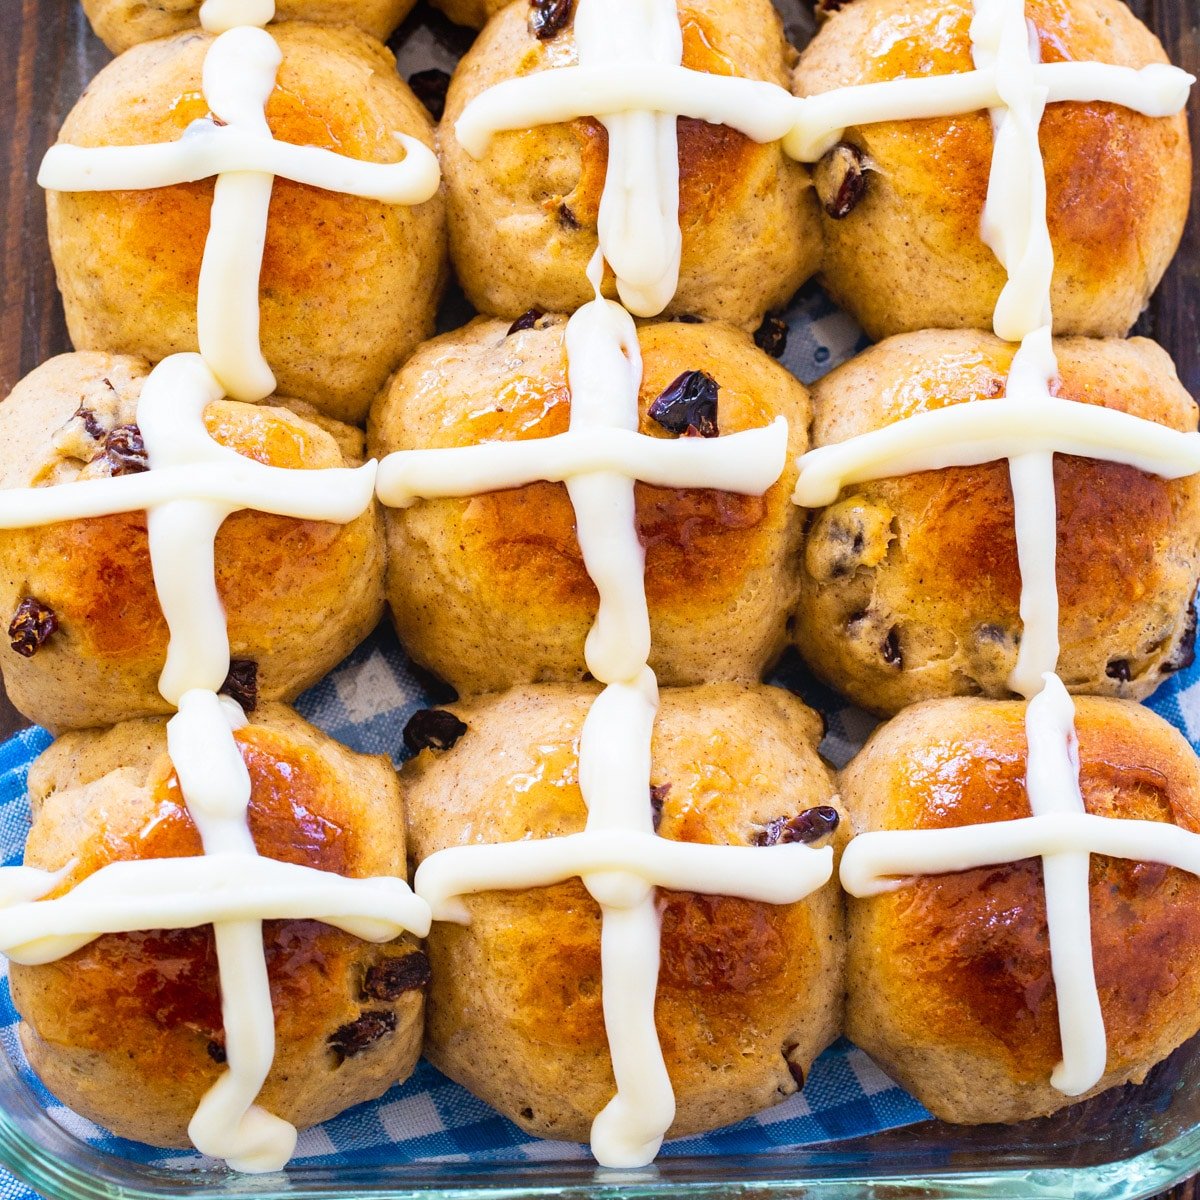 Nine Hot Cross Buns on a baking sheet.